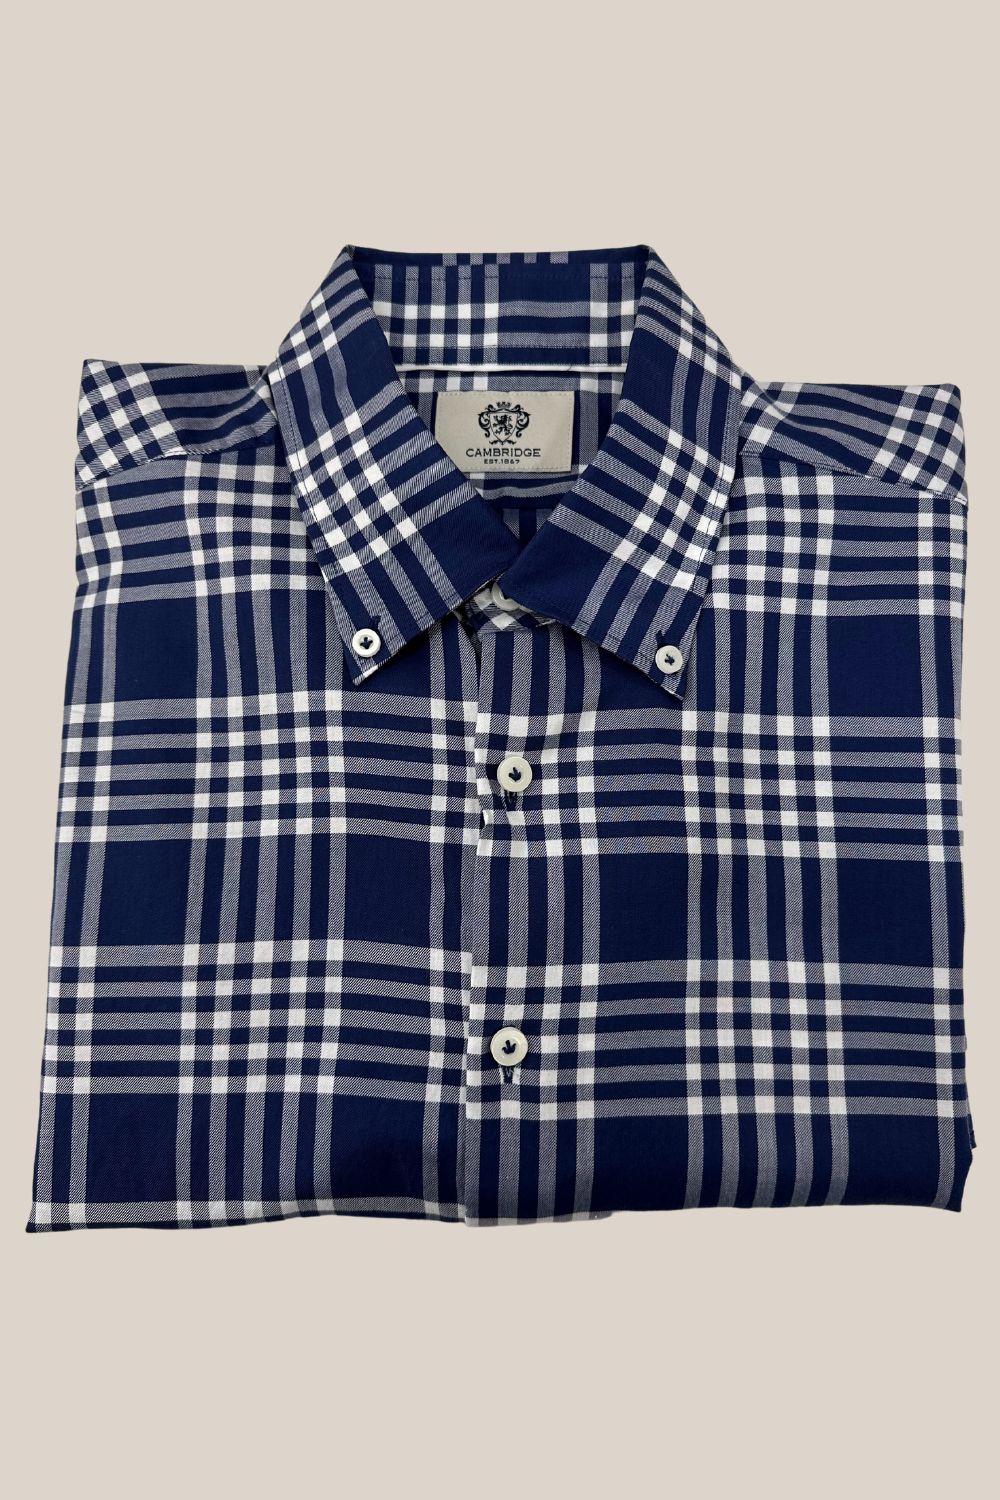 Cambridge Merricks Shirt